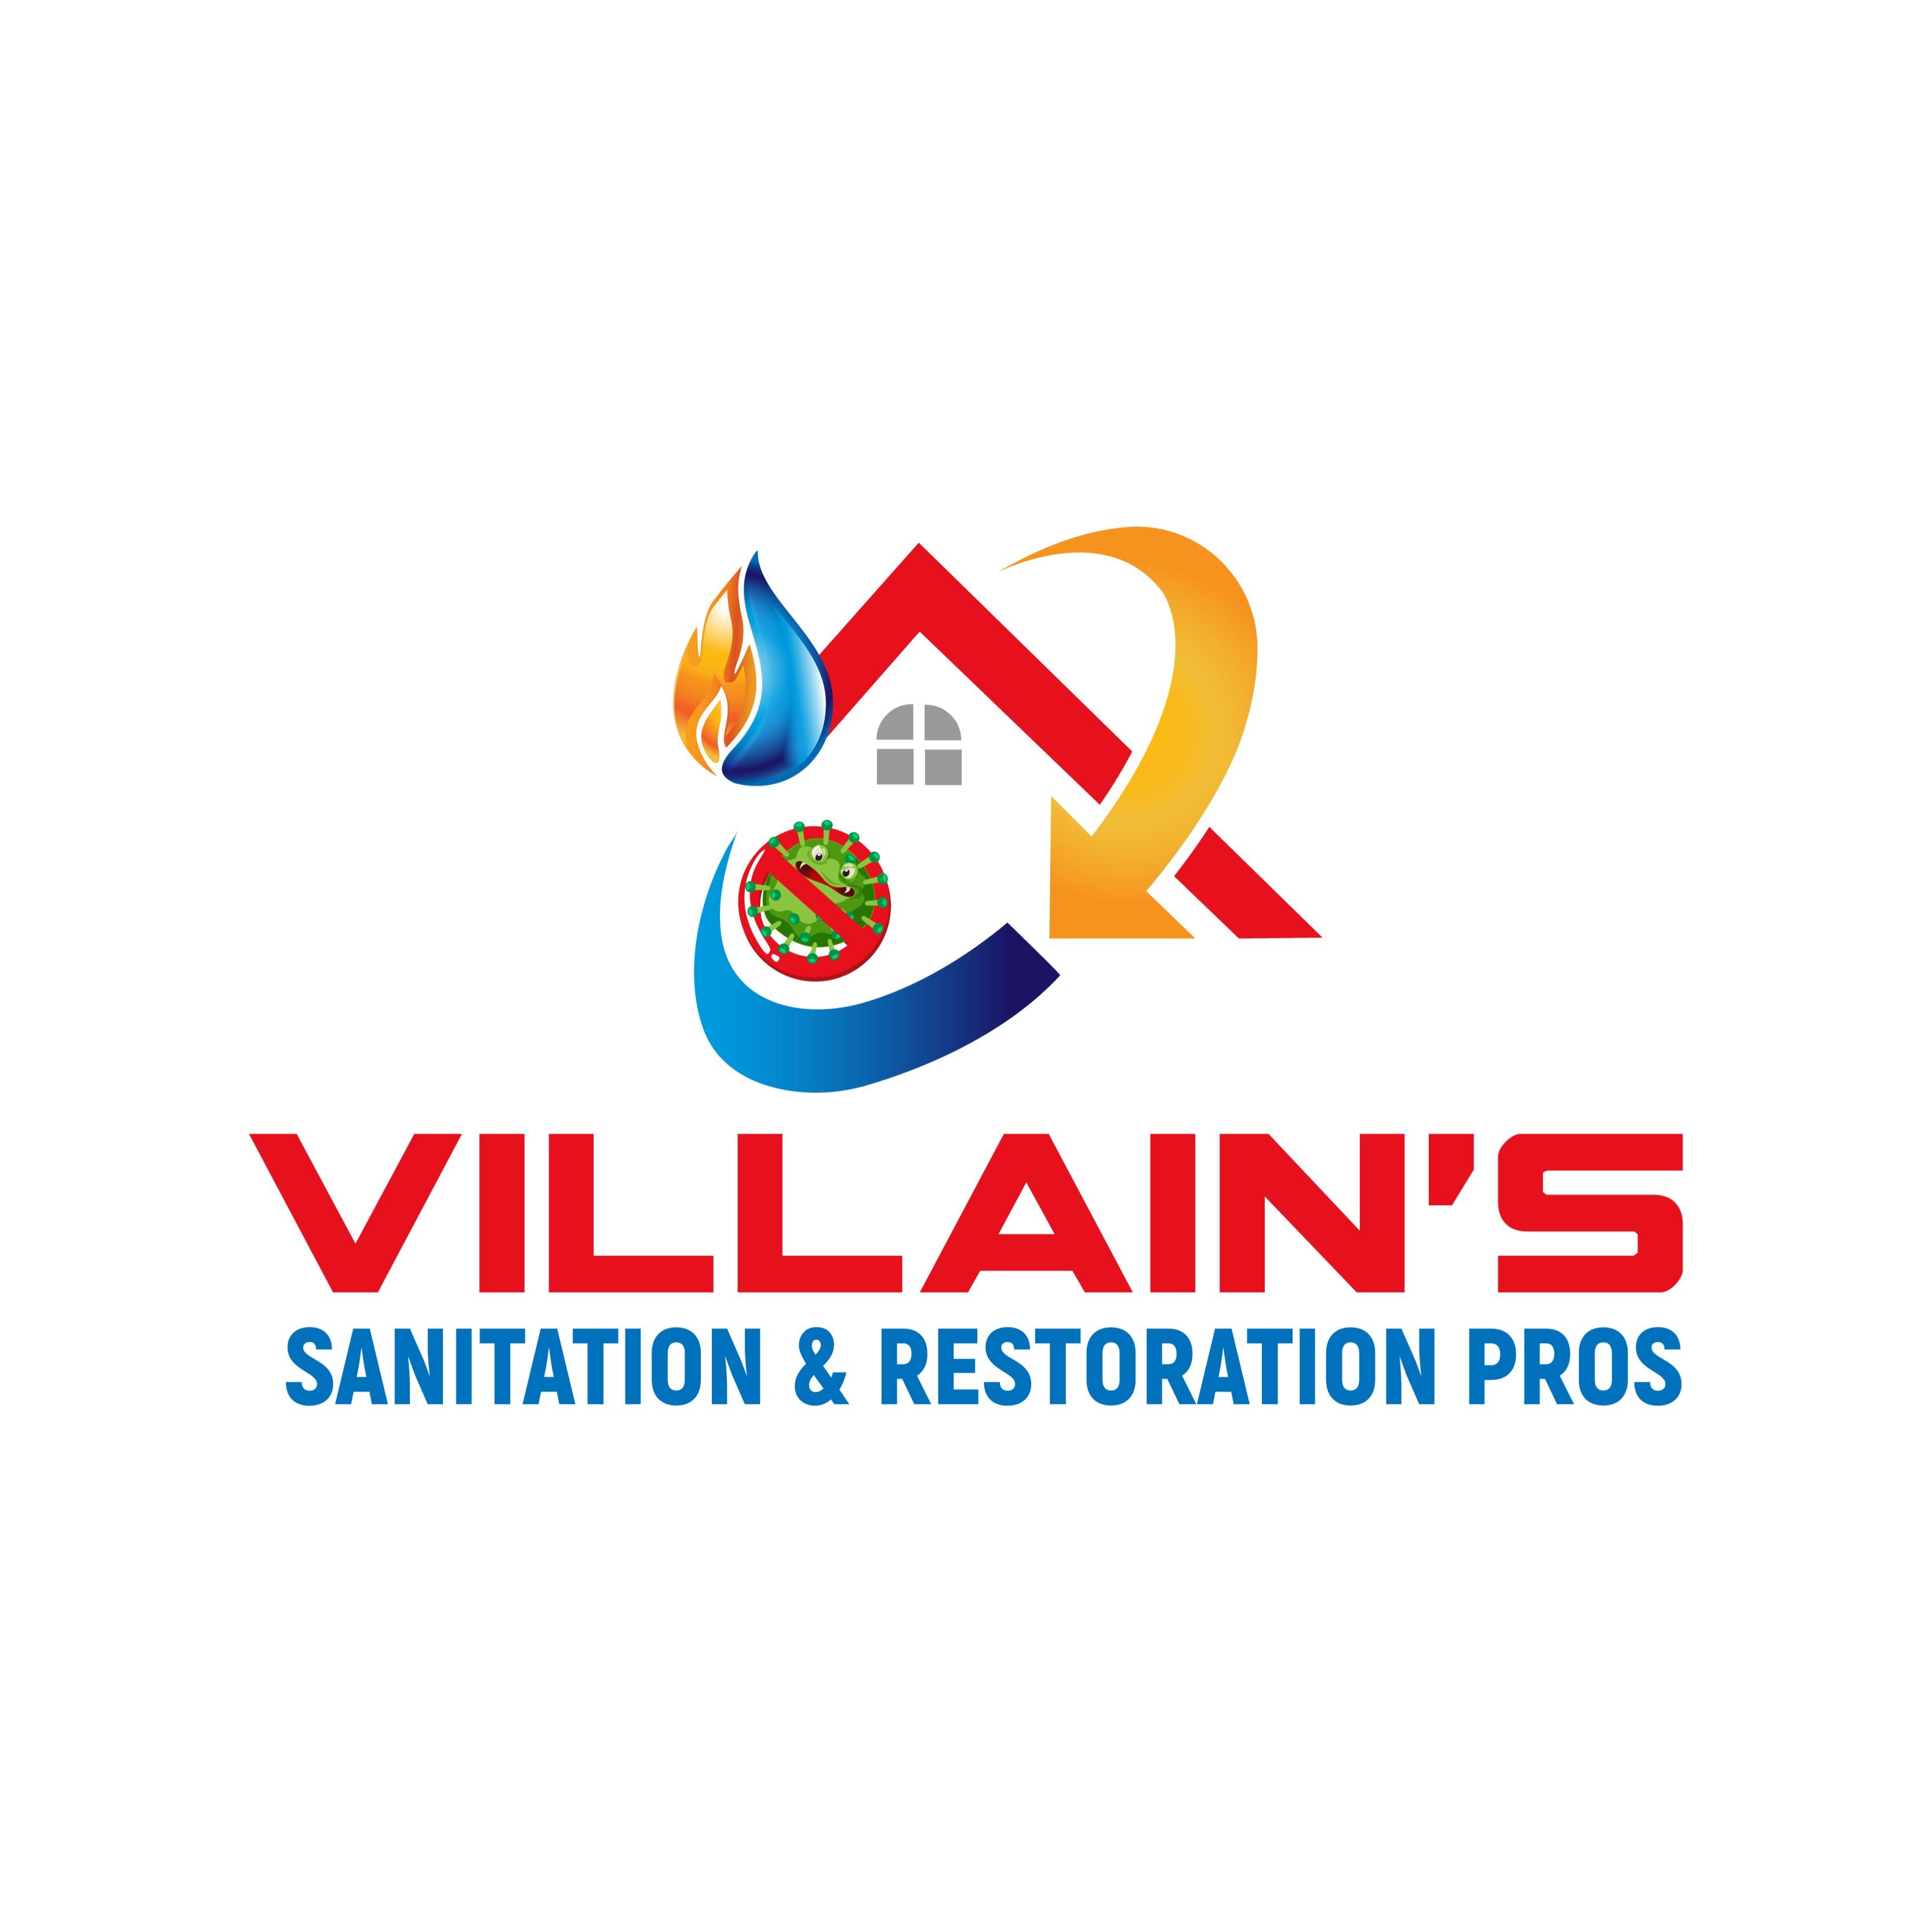 Villain's Sanitation & Restoration Pros